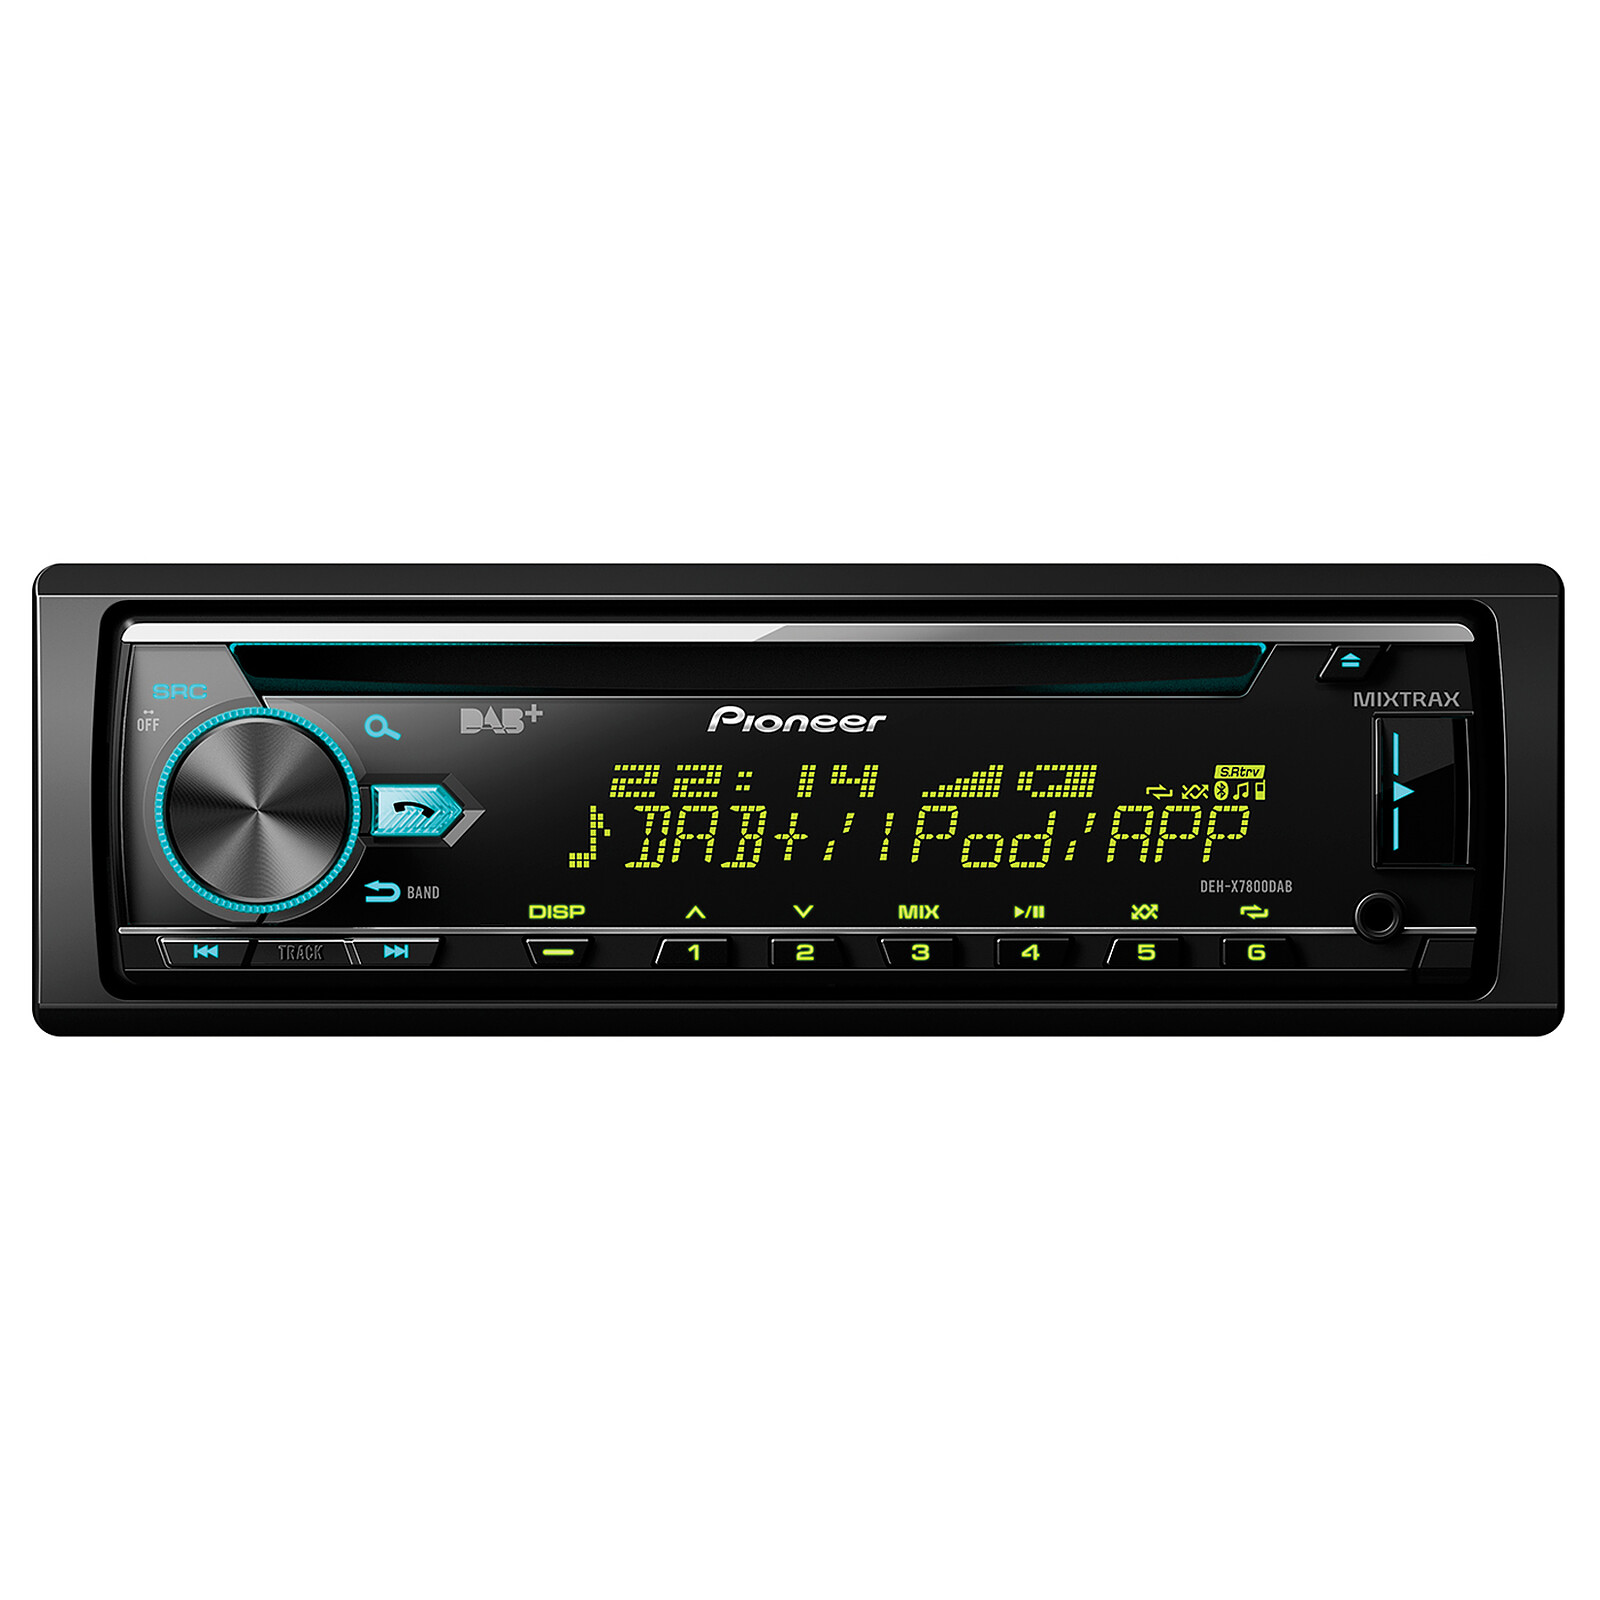 Autoradios haut de gamme - FM, DAB +, CD et Smartphone Audio